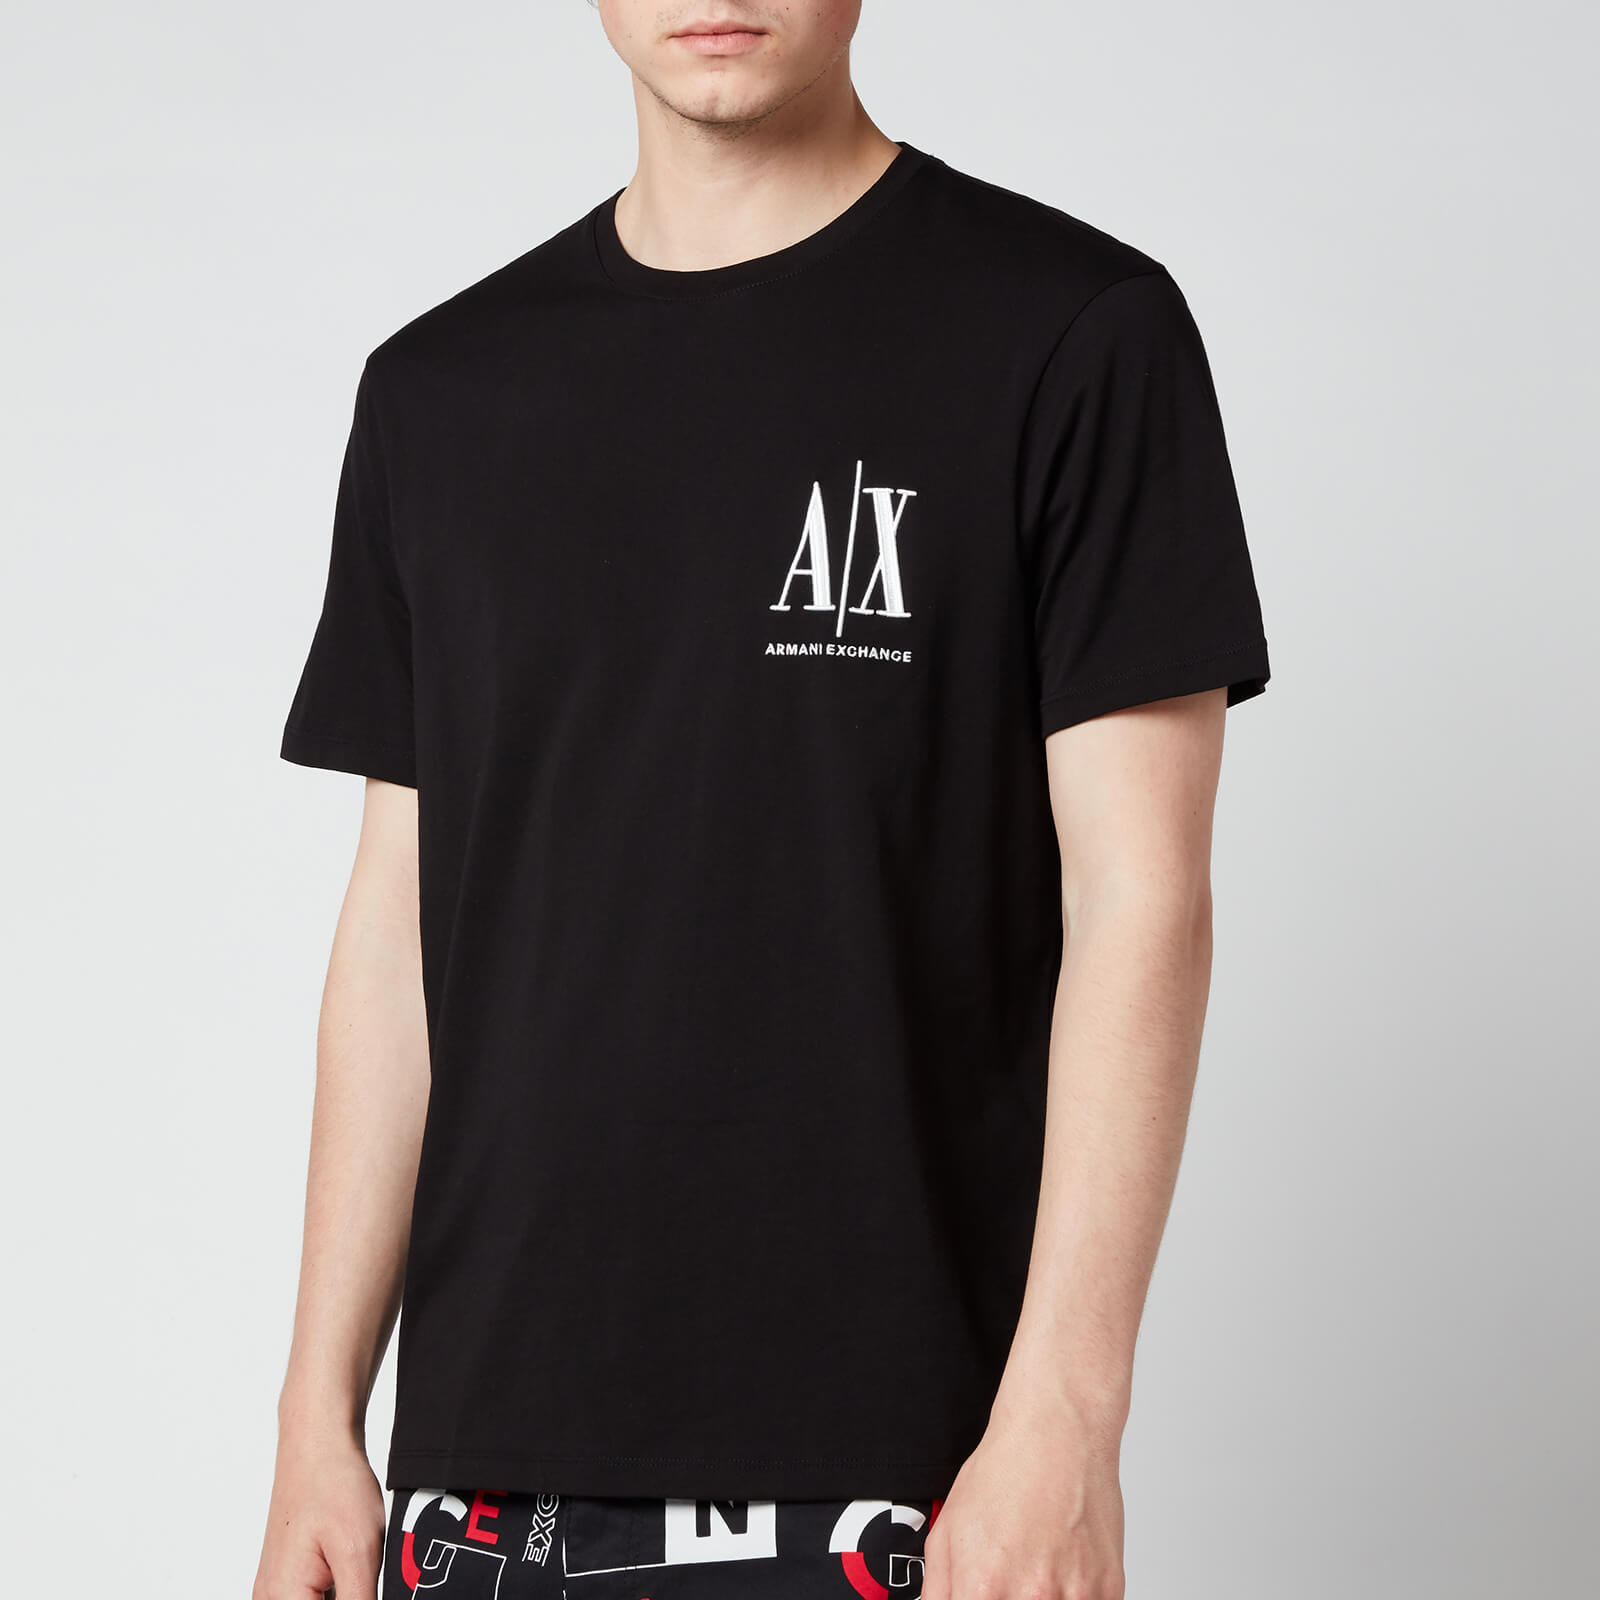 Armani Exchange Men's Small Ax Logo T-Shirt - Black - S